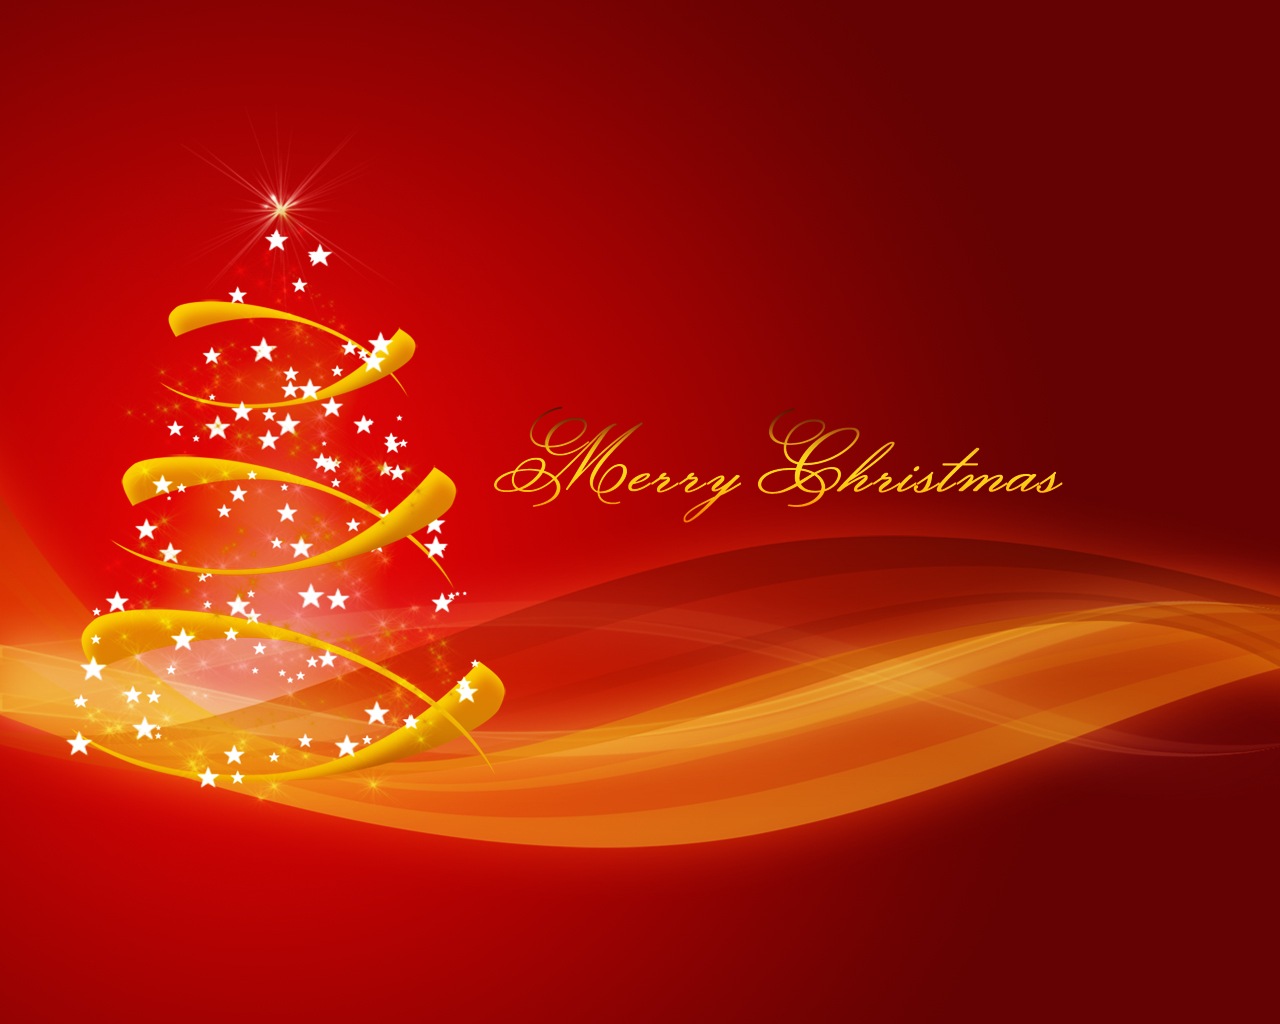 Merry Christmas Desktop Backgrounds Download Merry Christmas